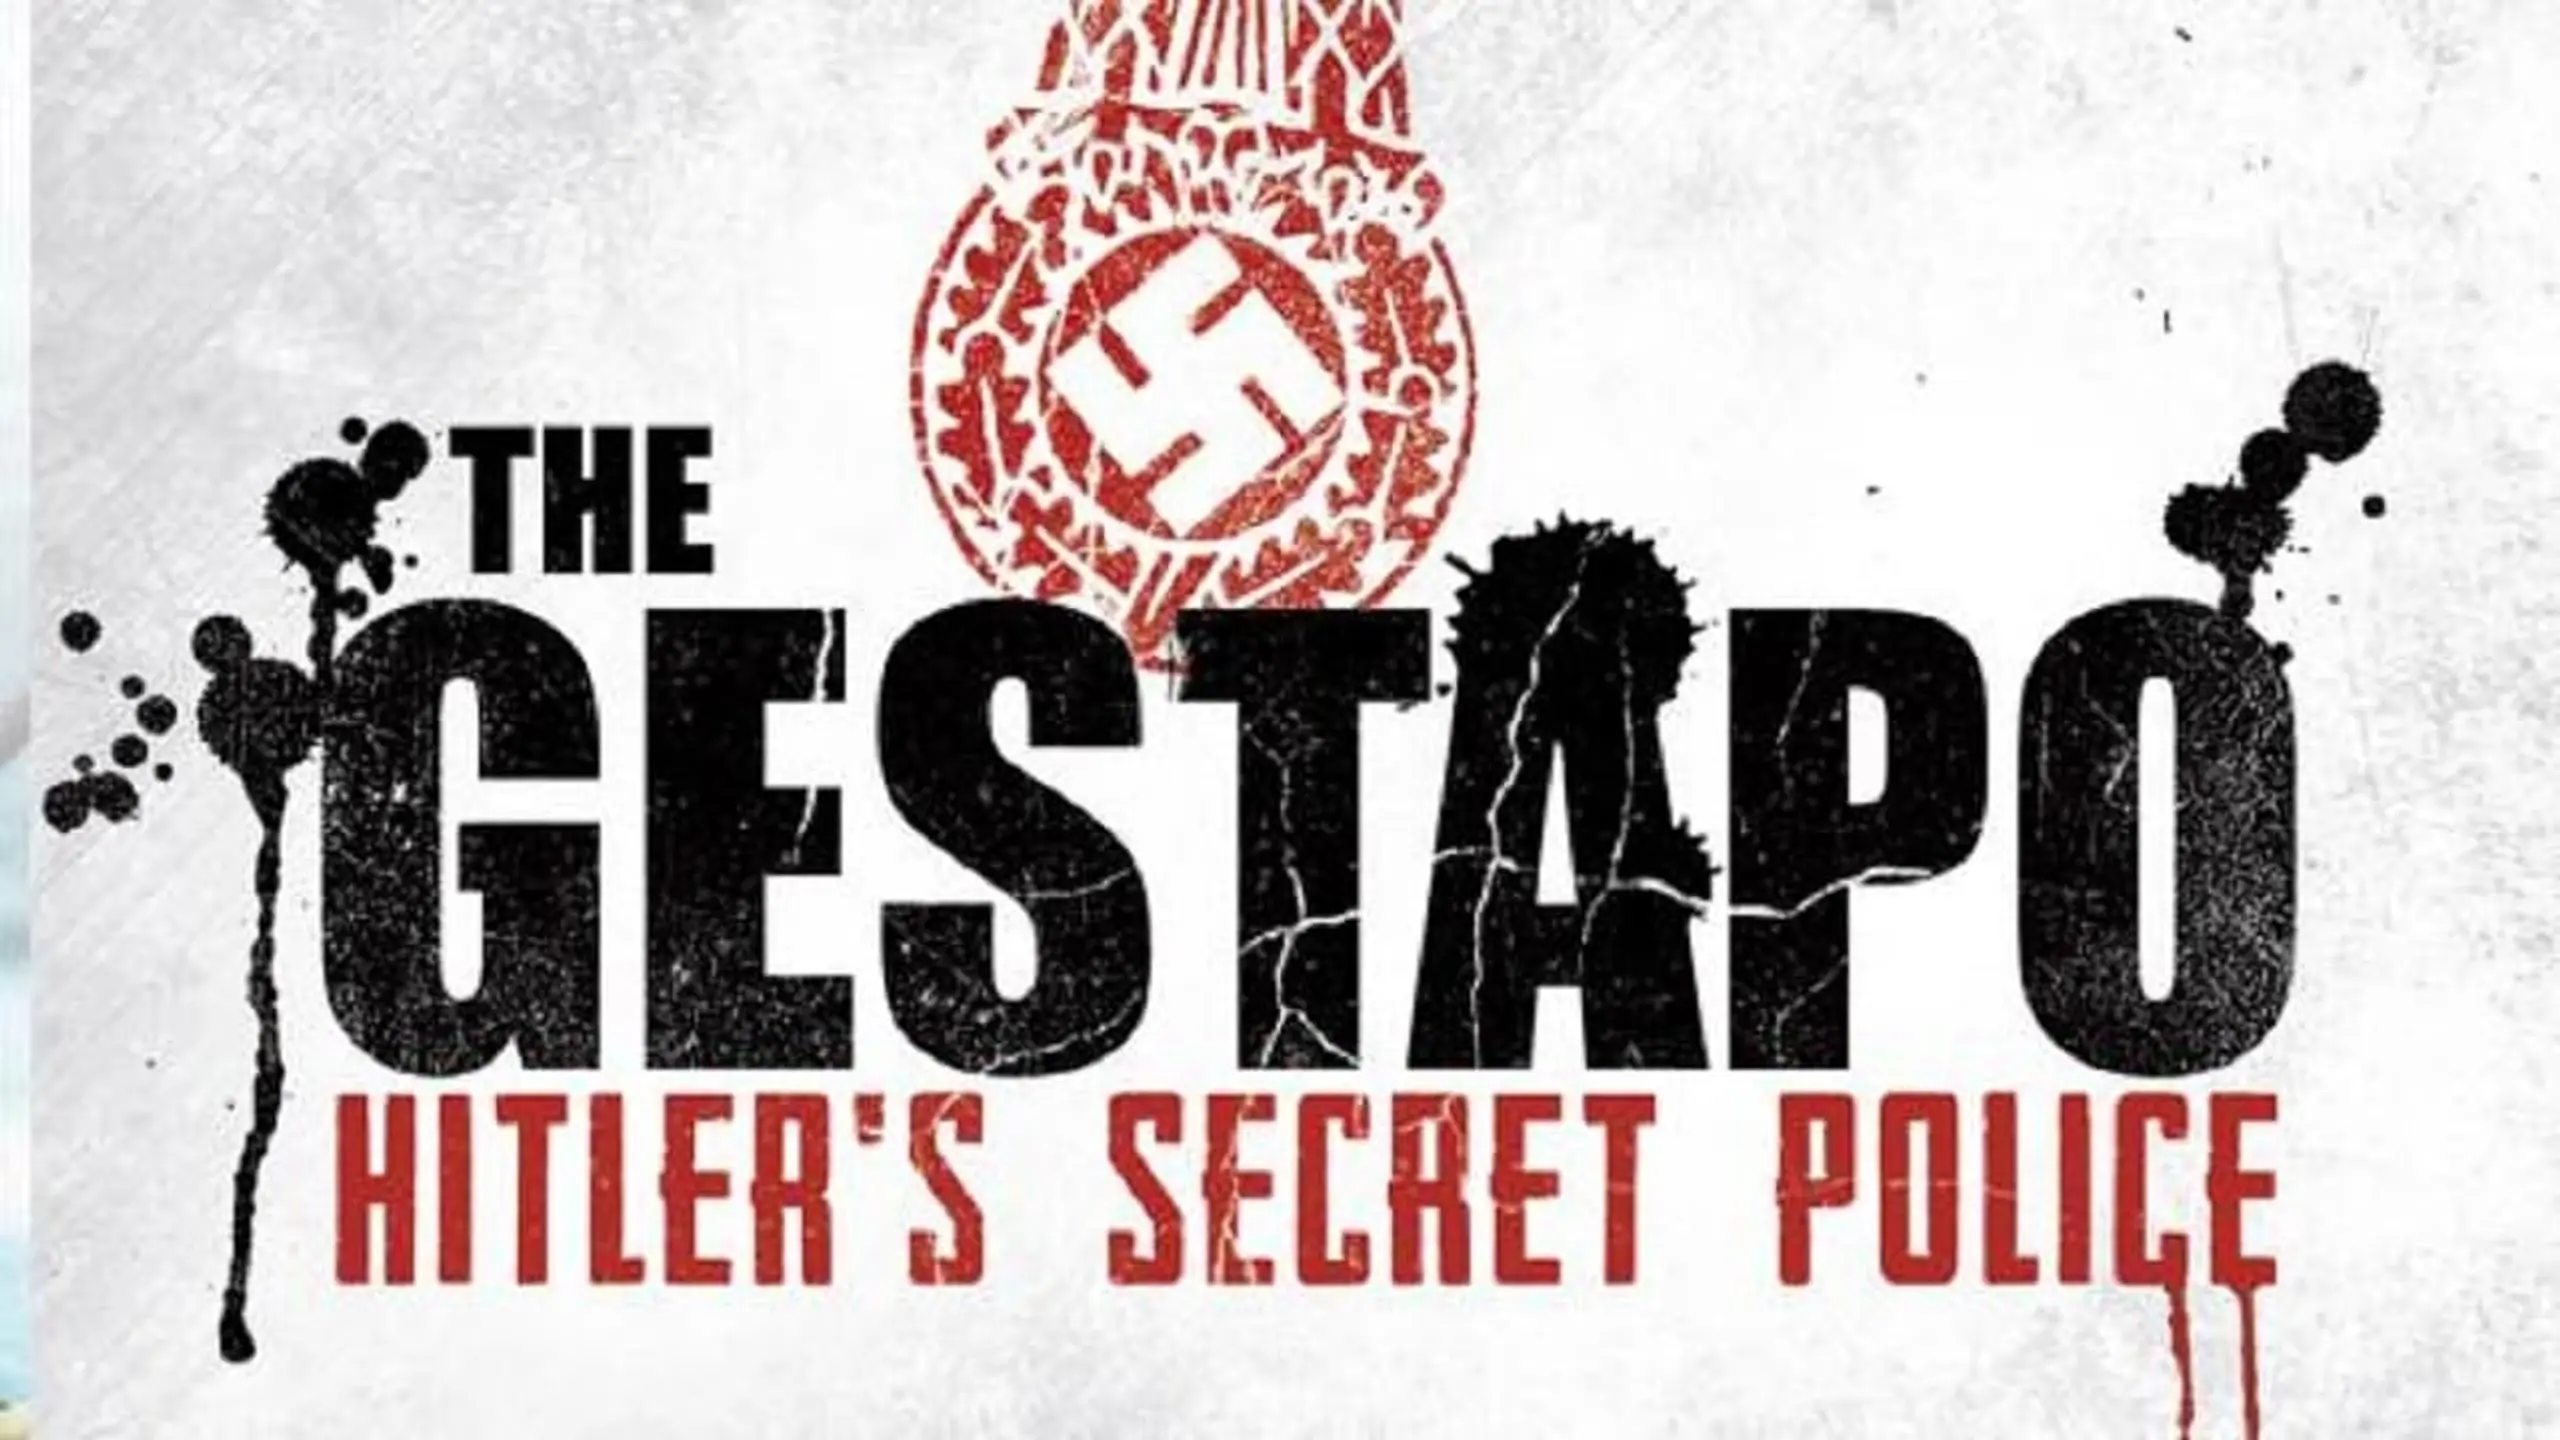 The Gestapo: Hitler's Secret Police